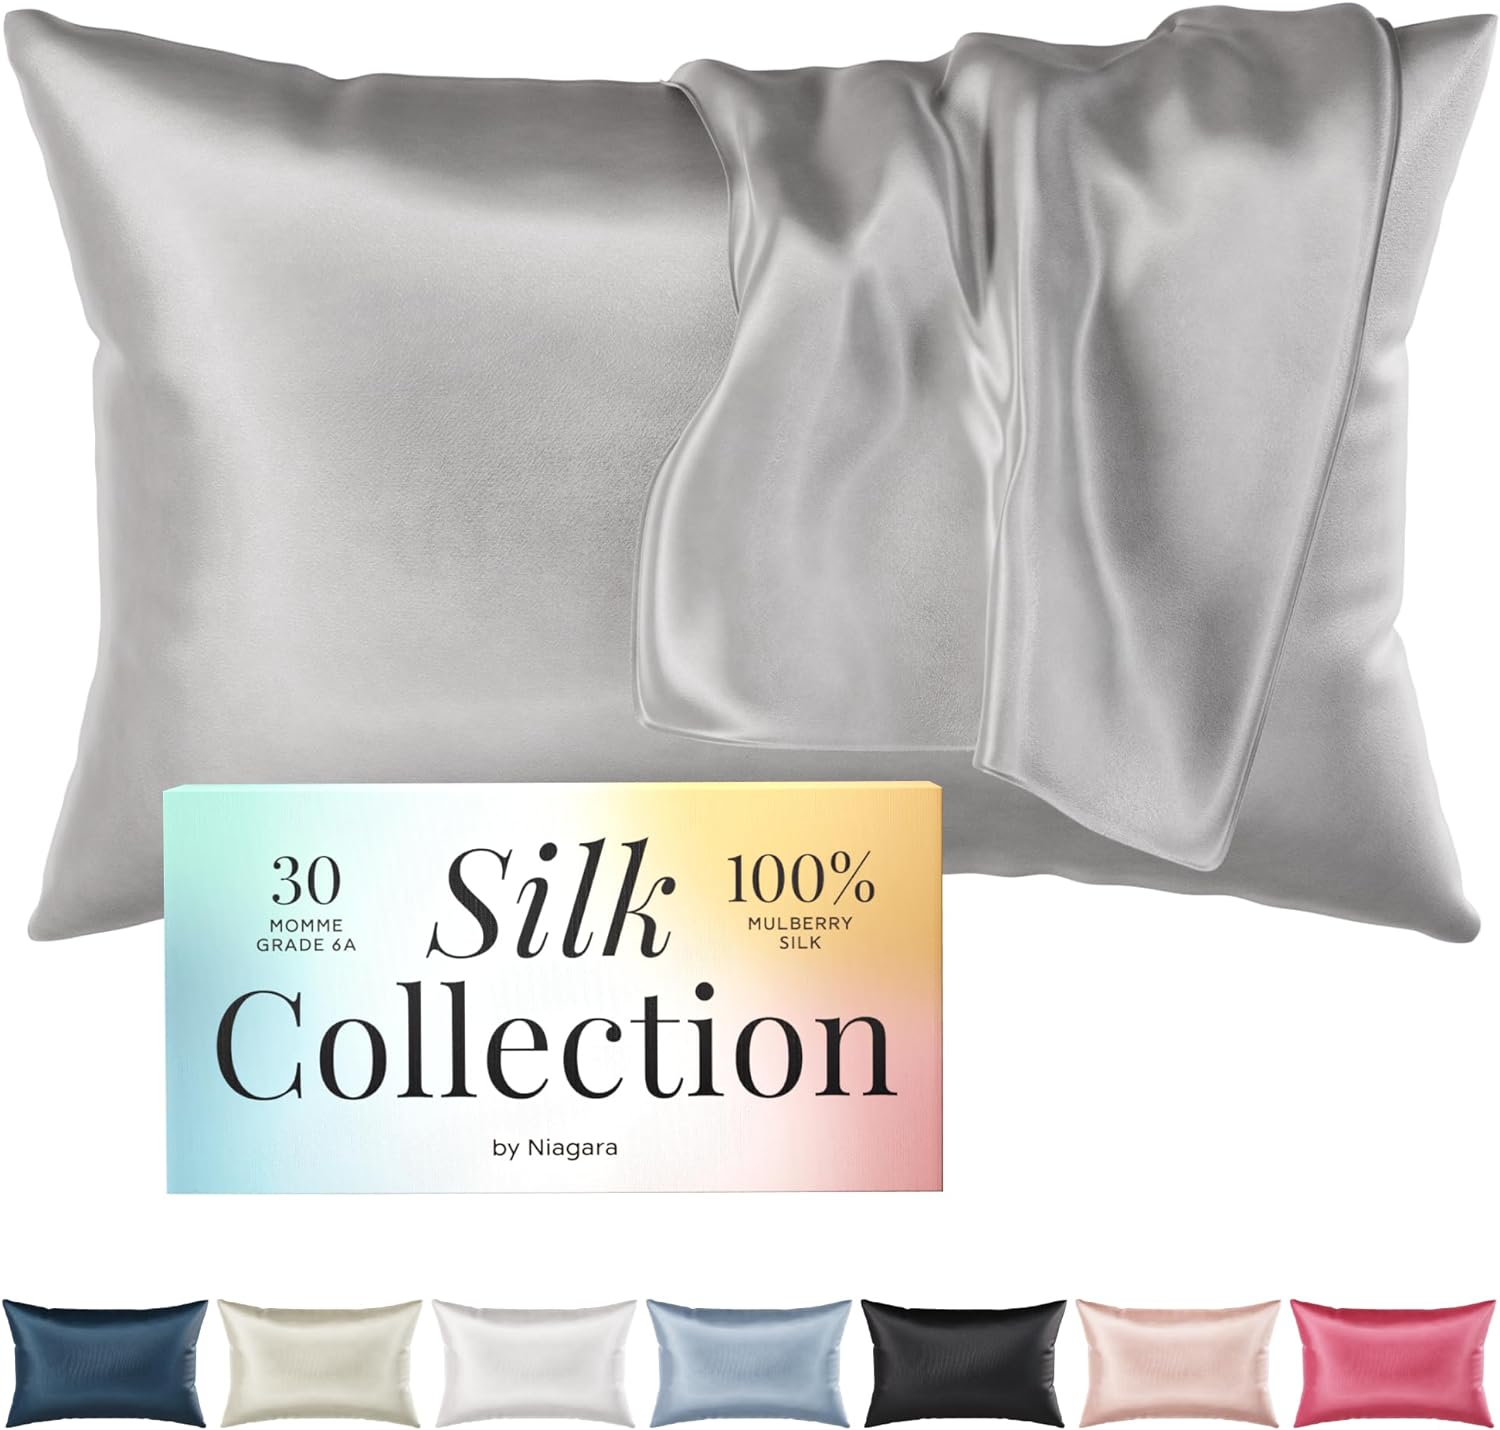 Niagara 100% Mulberry Silk Pillowcase - 30 Momme Silk Pillow case for Hair and Skin - Grade 6A Silk Pillow Cases with Zipper - Soft & Cooling Grey Silk Pillowcase Queen Size (20x30)